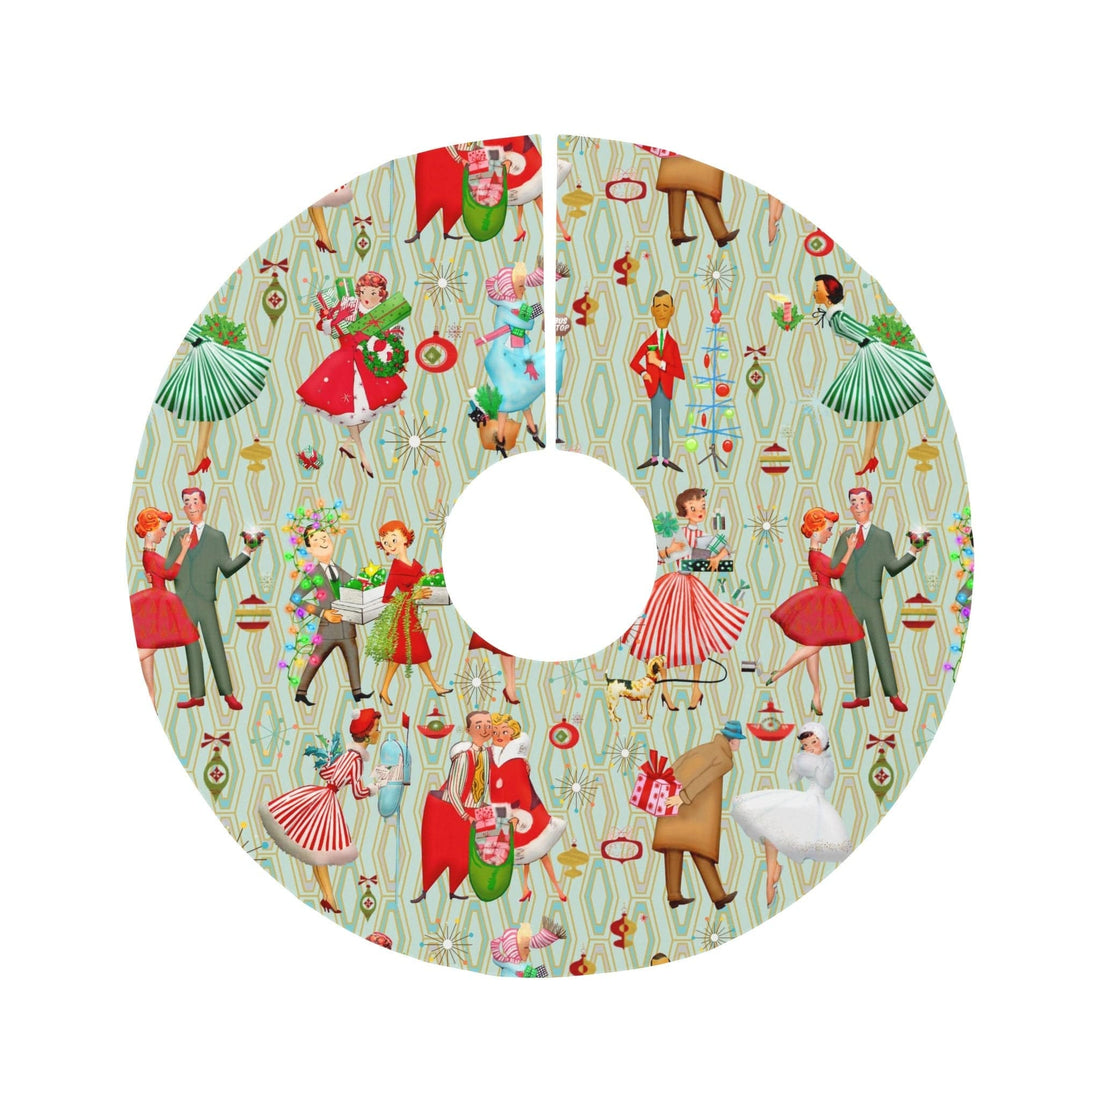 Kate McEnroe New York Vintage 1950s Retro Kitsch Christmas Tree Skirt, Vintage Housewives, Couples Xmas Card Inspired Art, MCM Holiday Decor 58449327375373928236